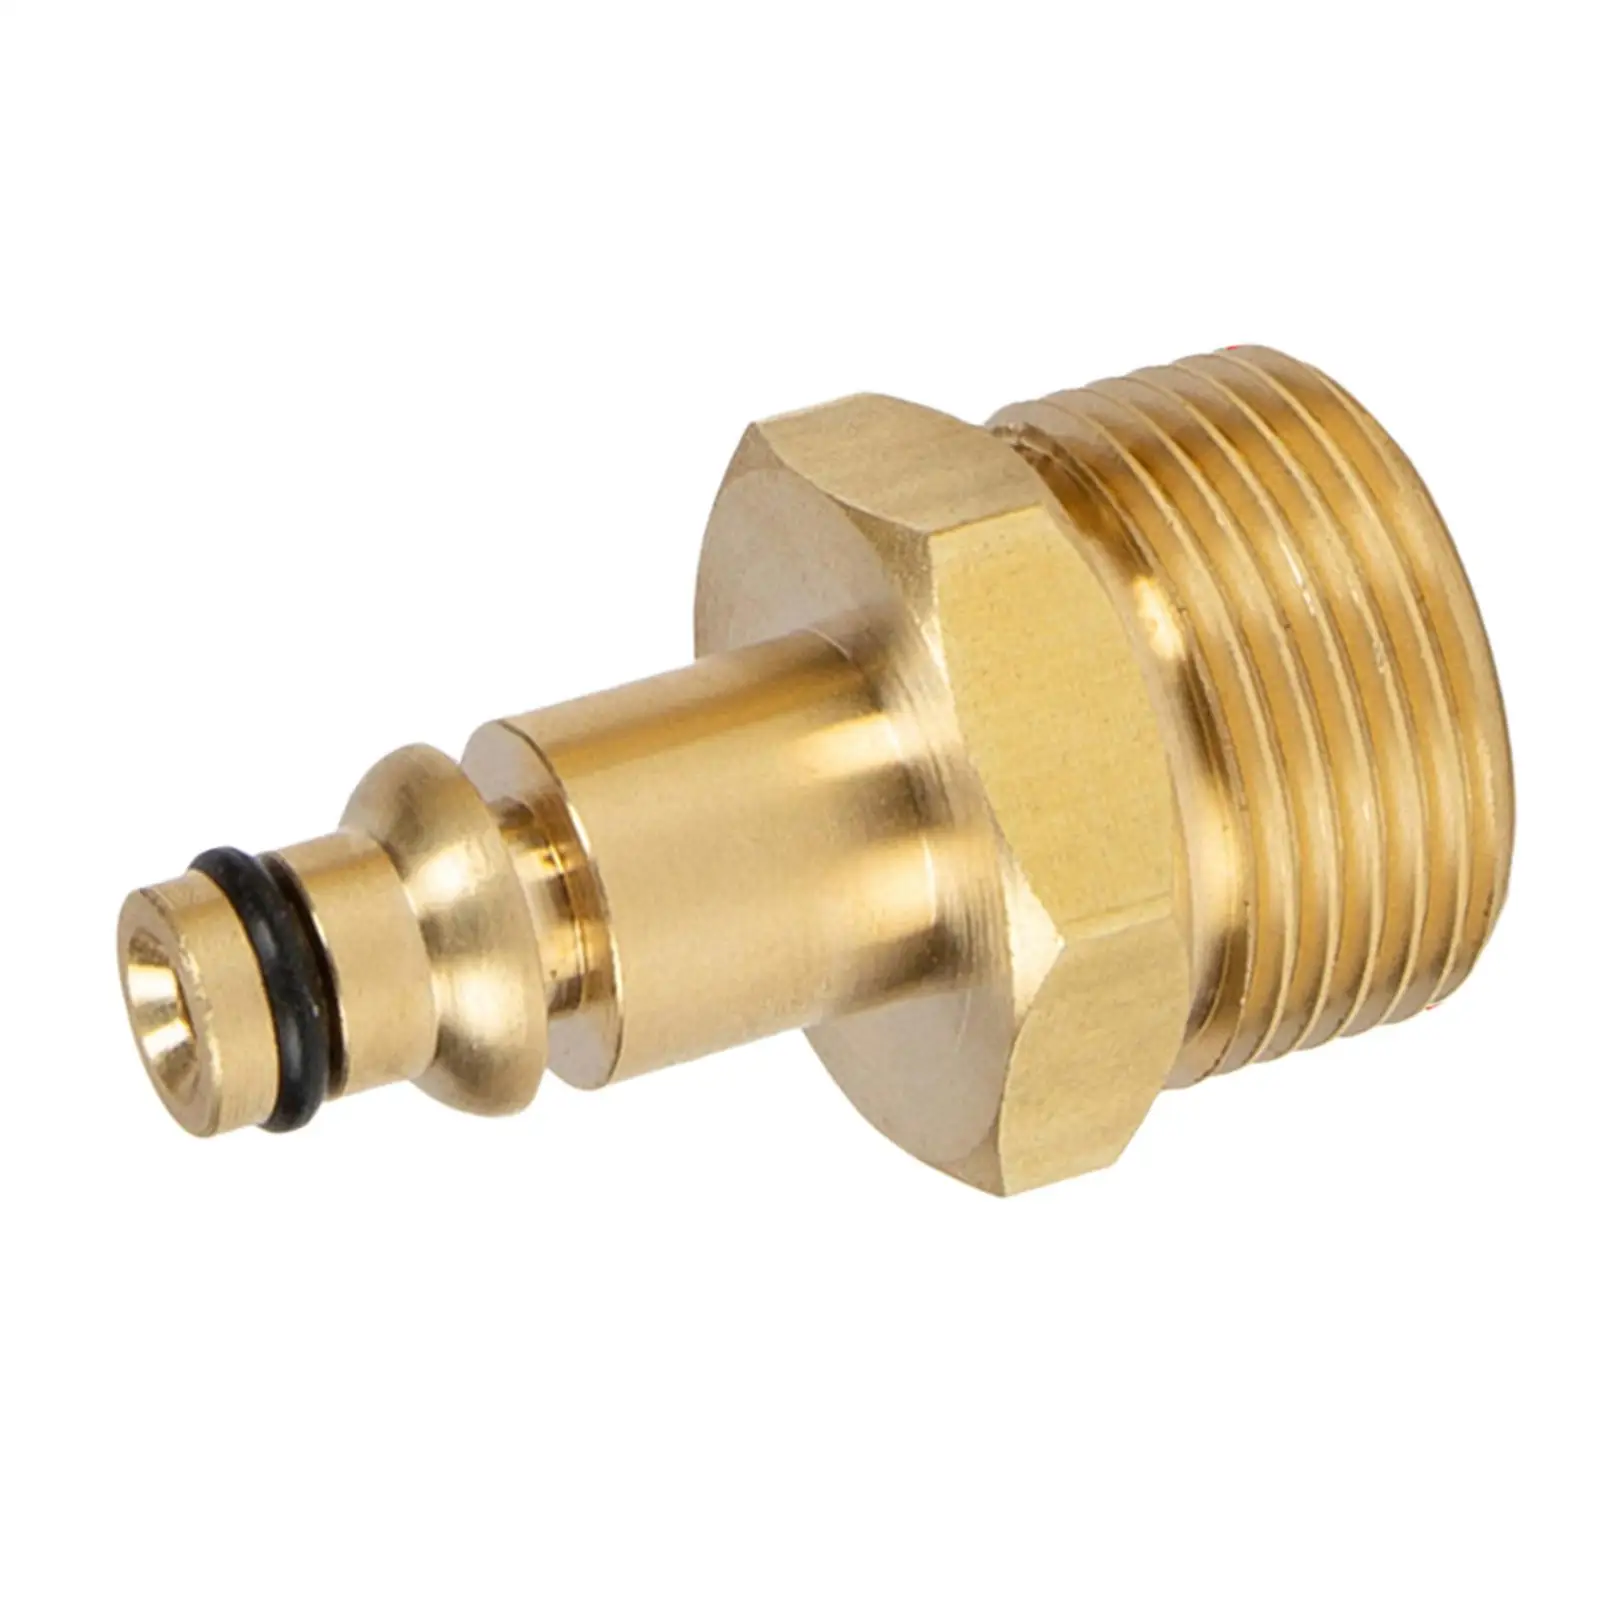 Pressure Washer Hose Converter Adapter Kit Brass for  Pressure Washer